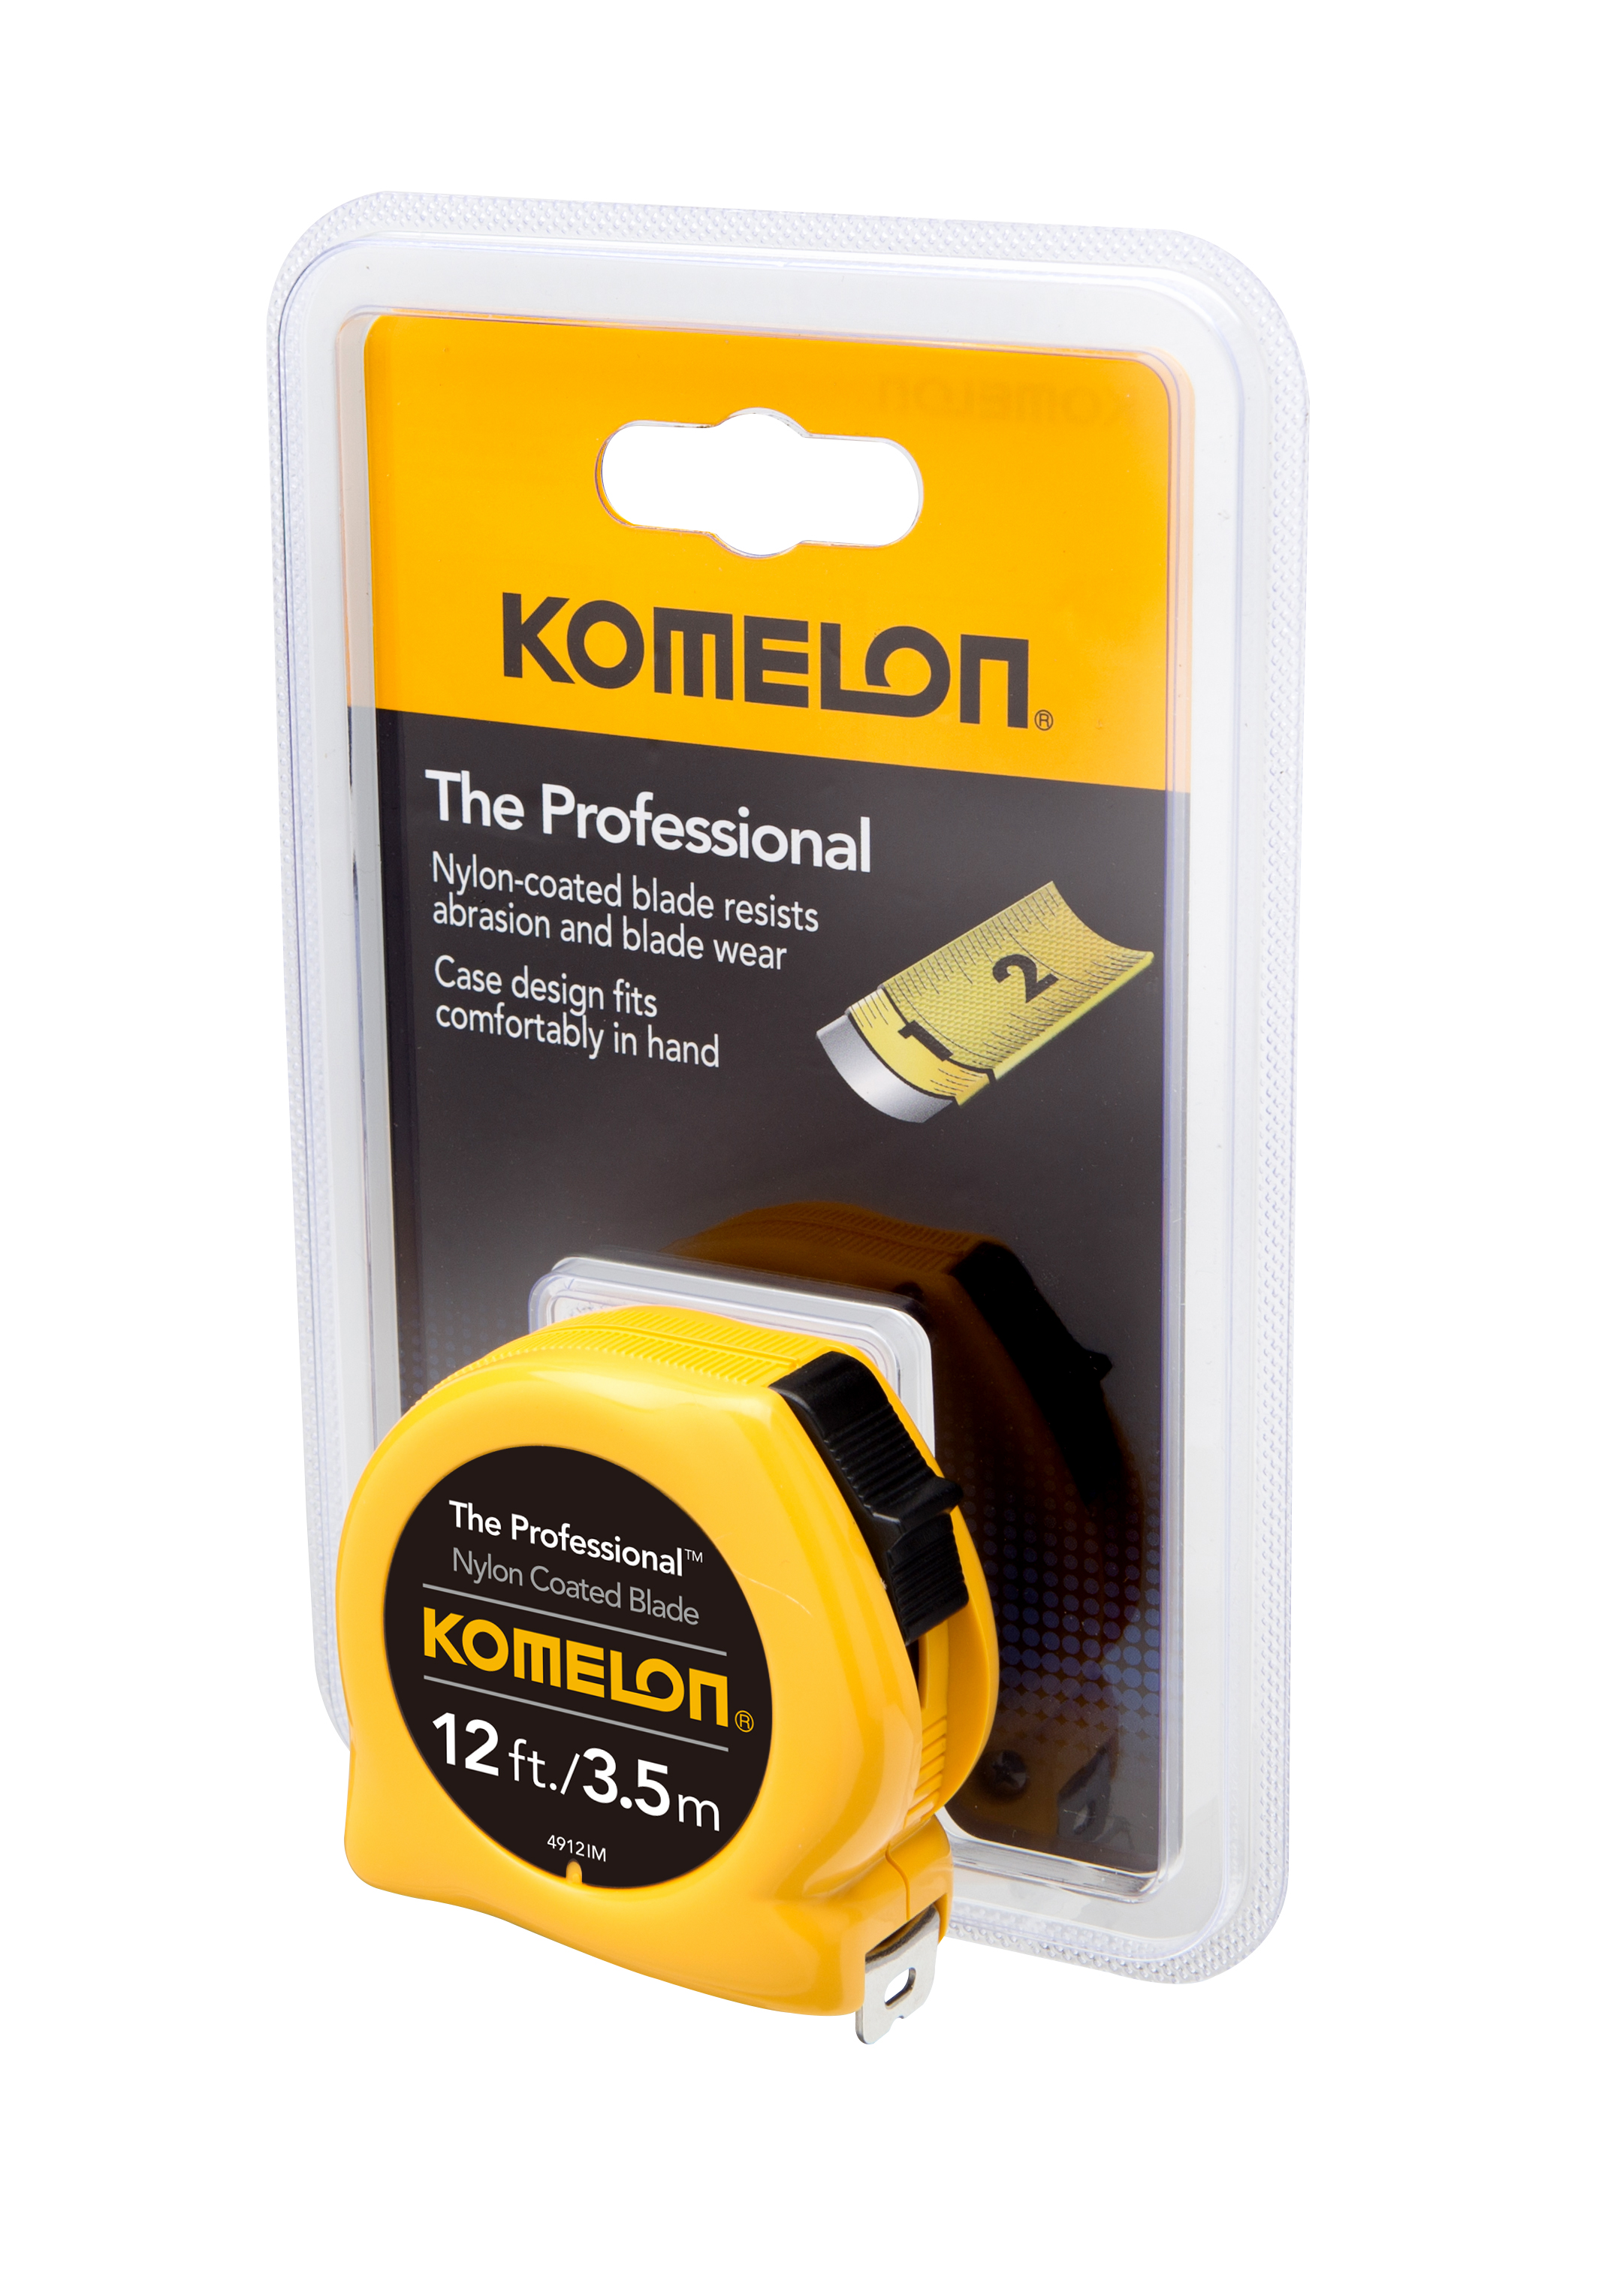 Komelon The Professional Metric Tape Measure - image 3 of 6